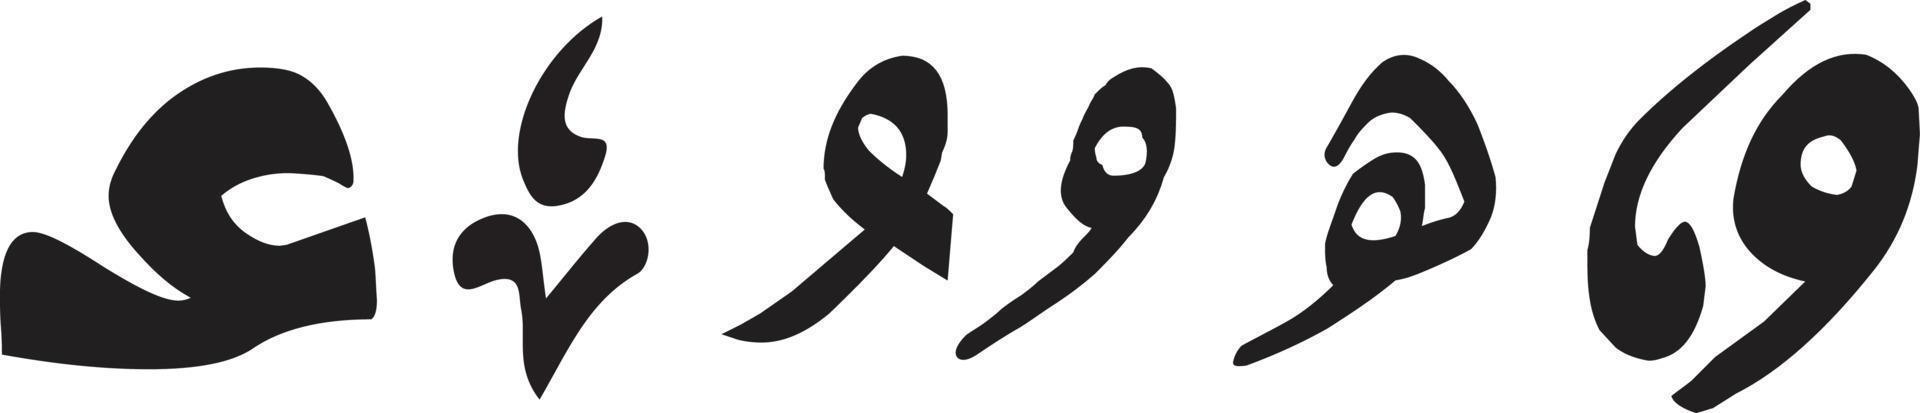 vector libre de caligrafía islámica de título árabe